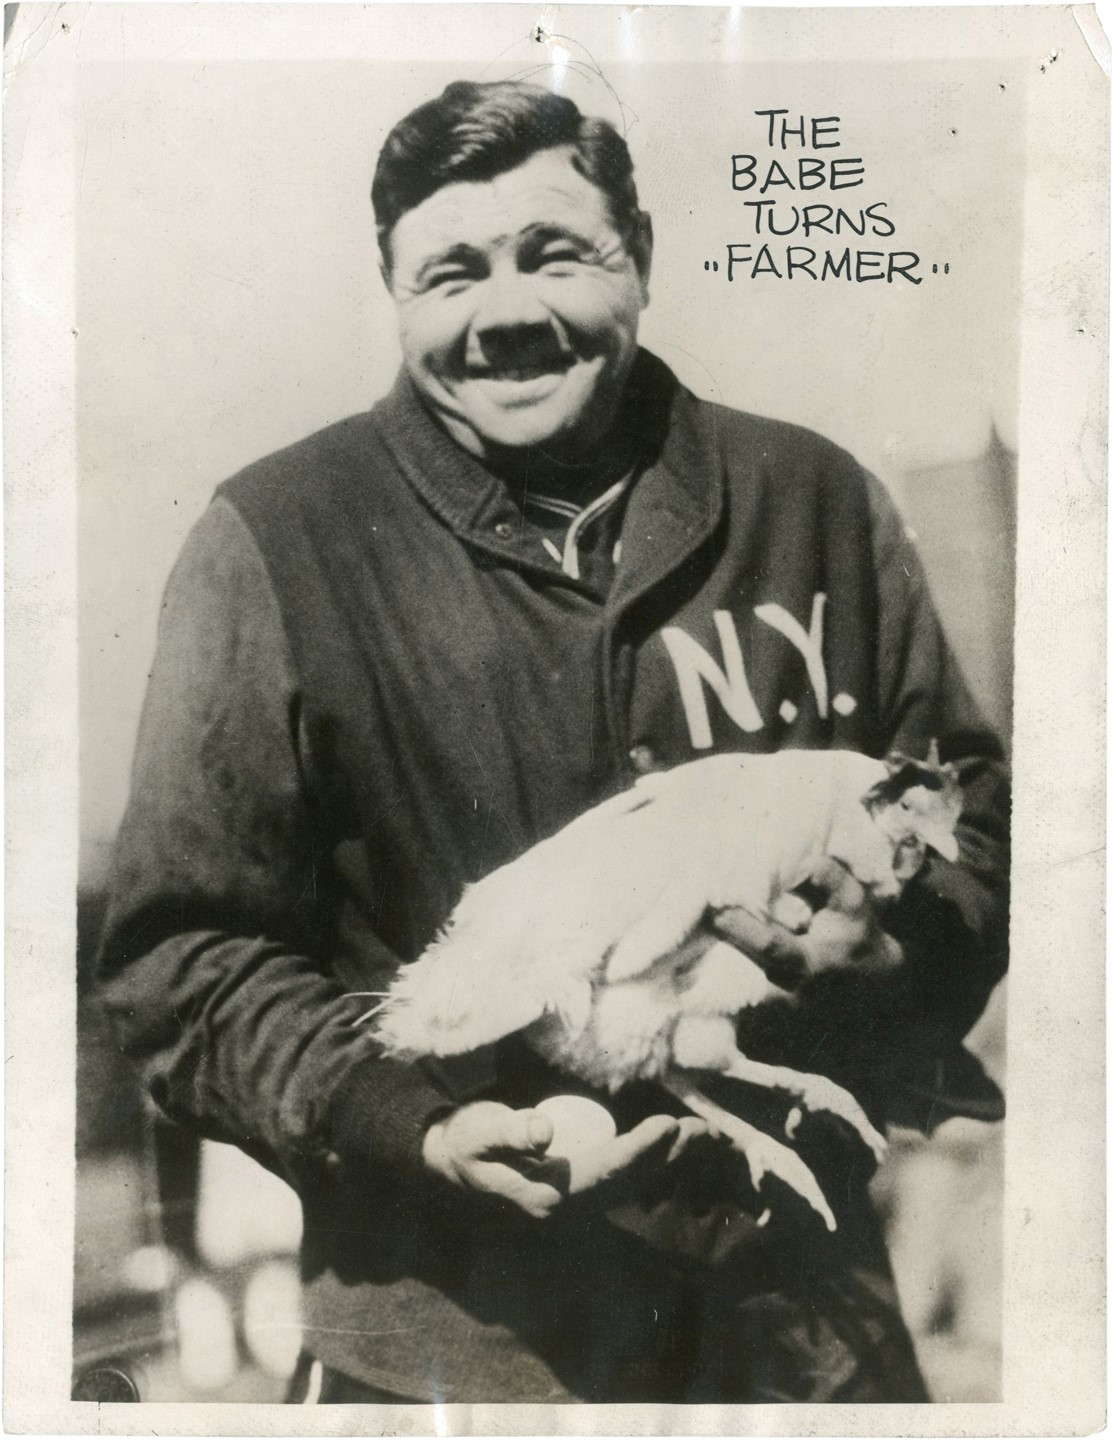 Type I Babe Ruth - The Babe Turns "Farmer" Photo